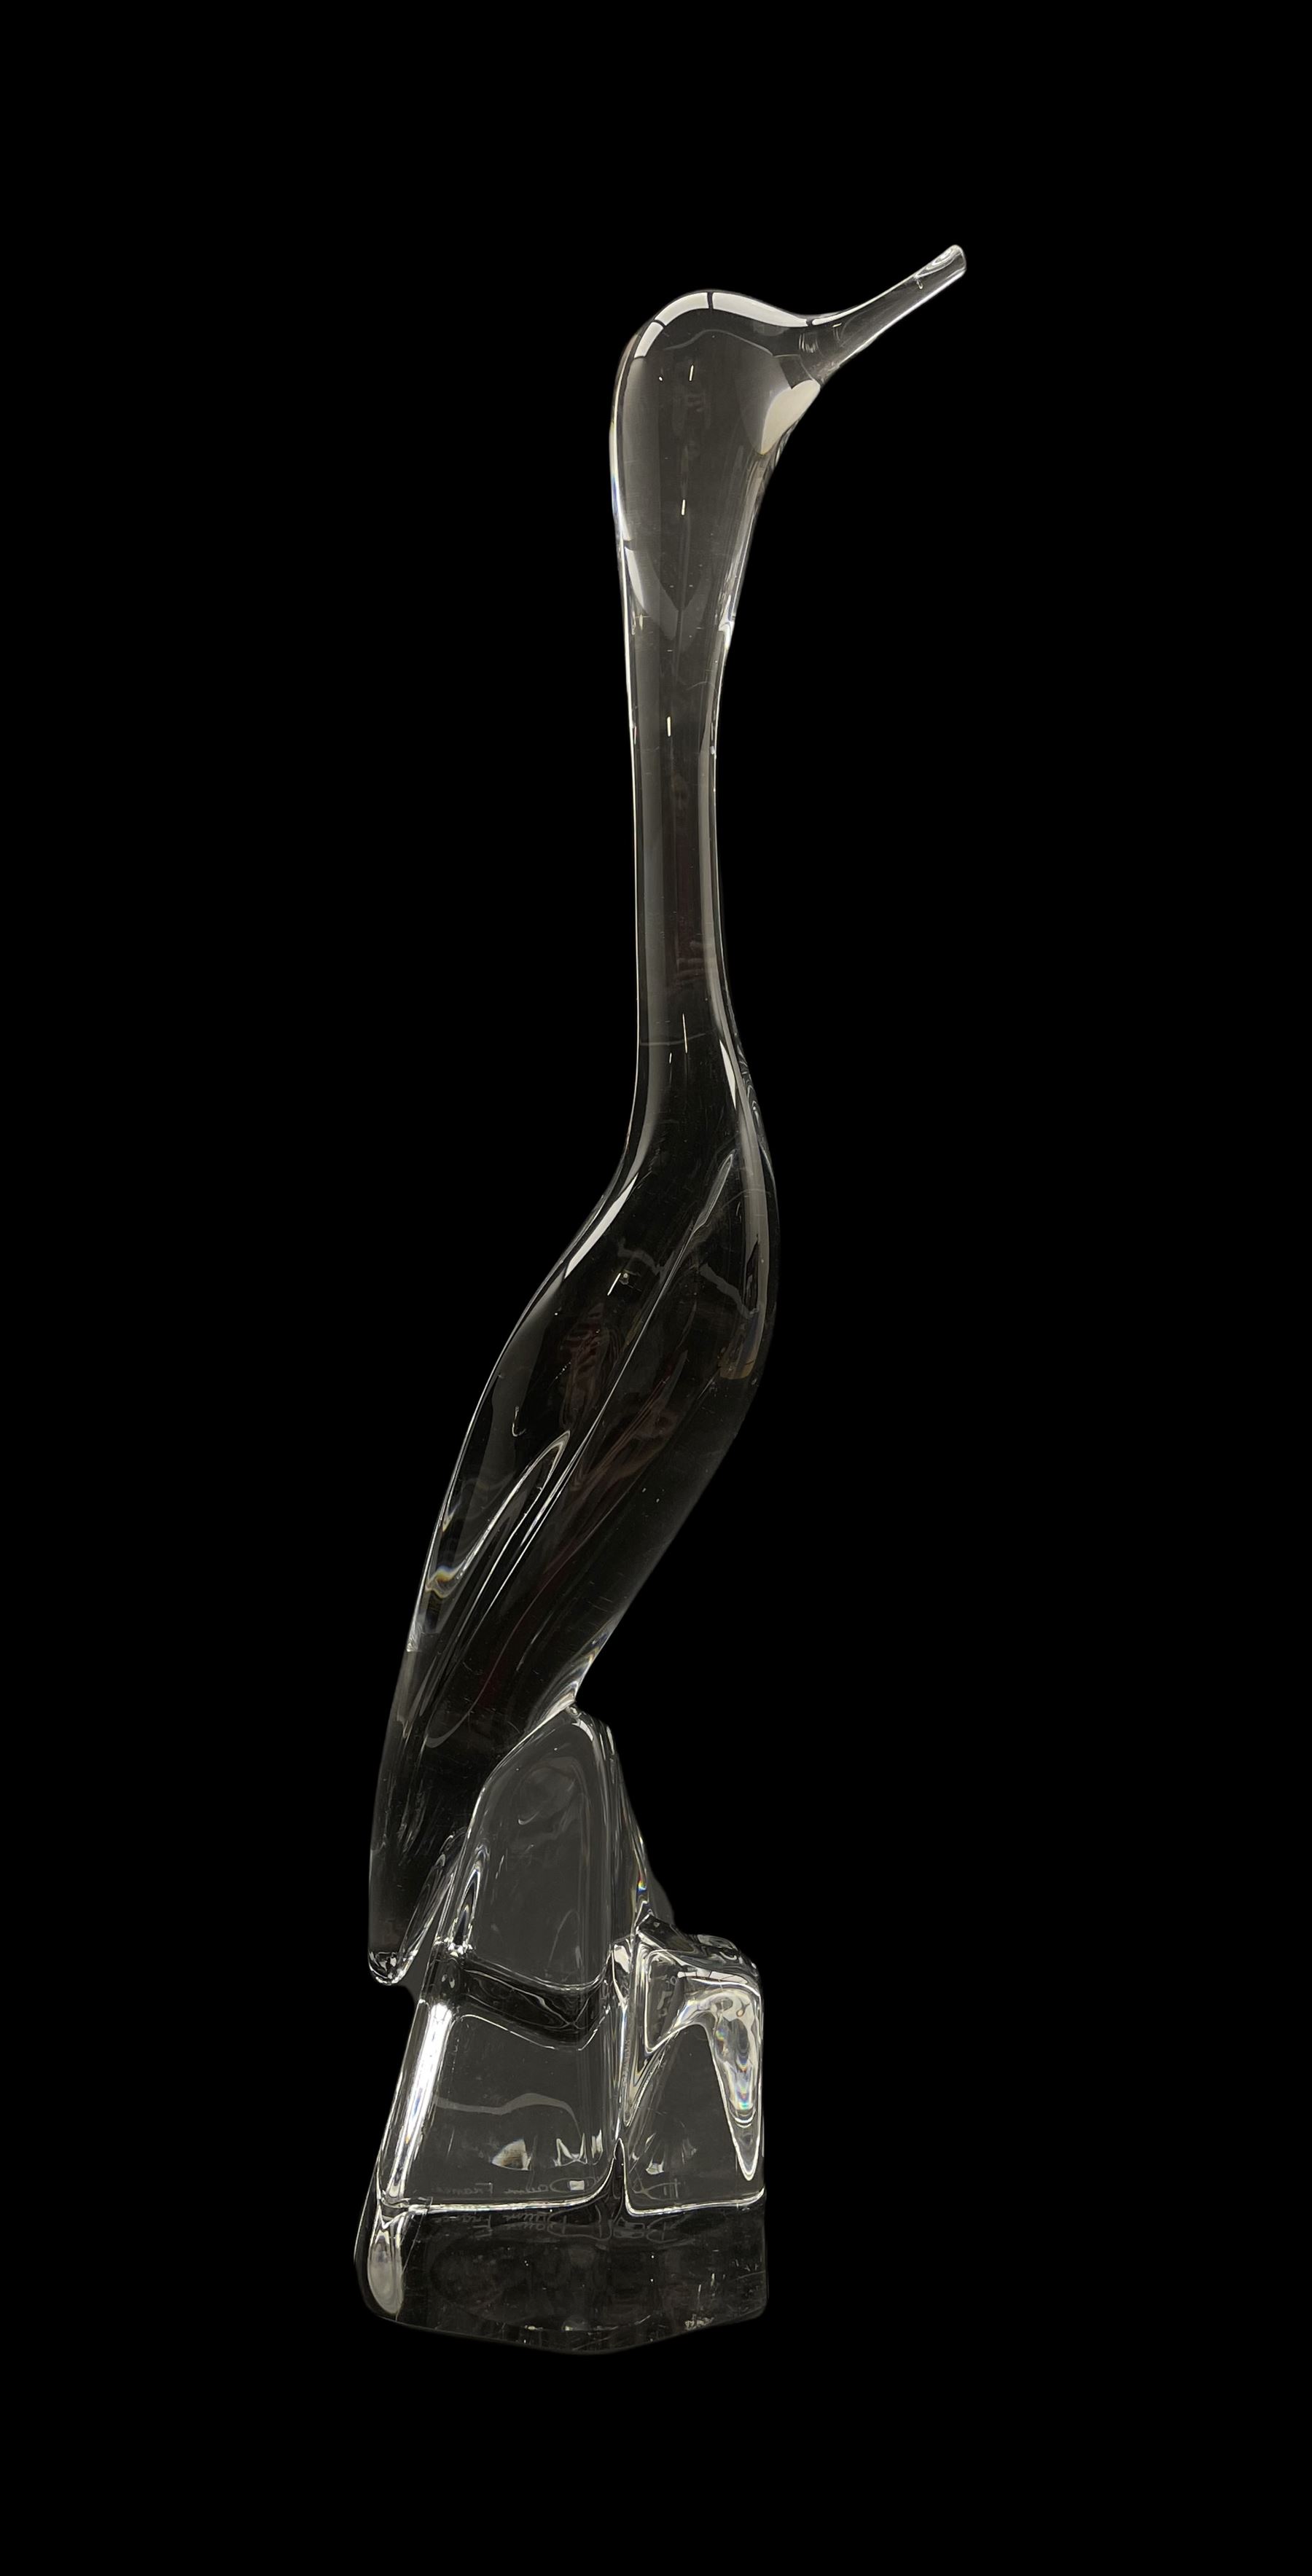 Daum glass model of a Heron